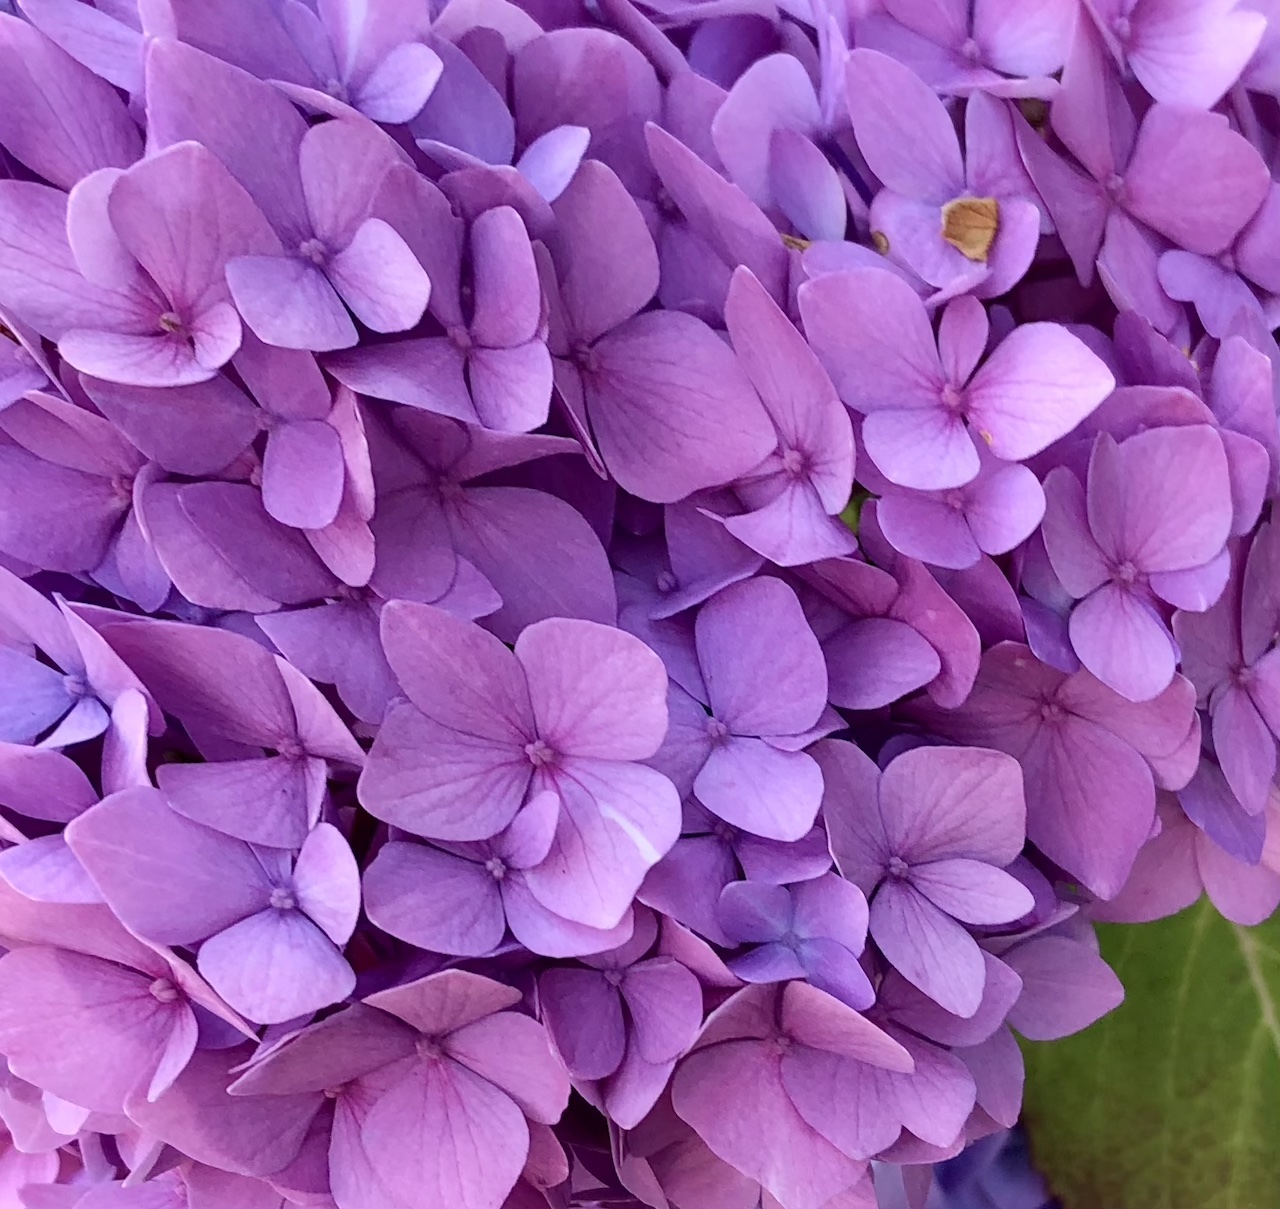 Hydrangea close-up, pink and purple.